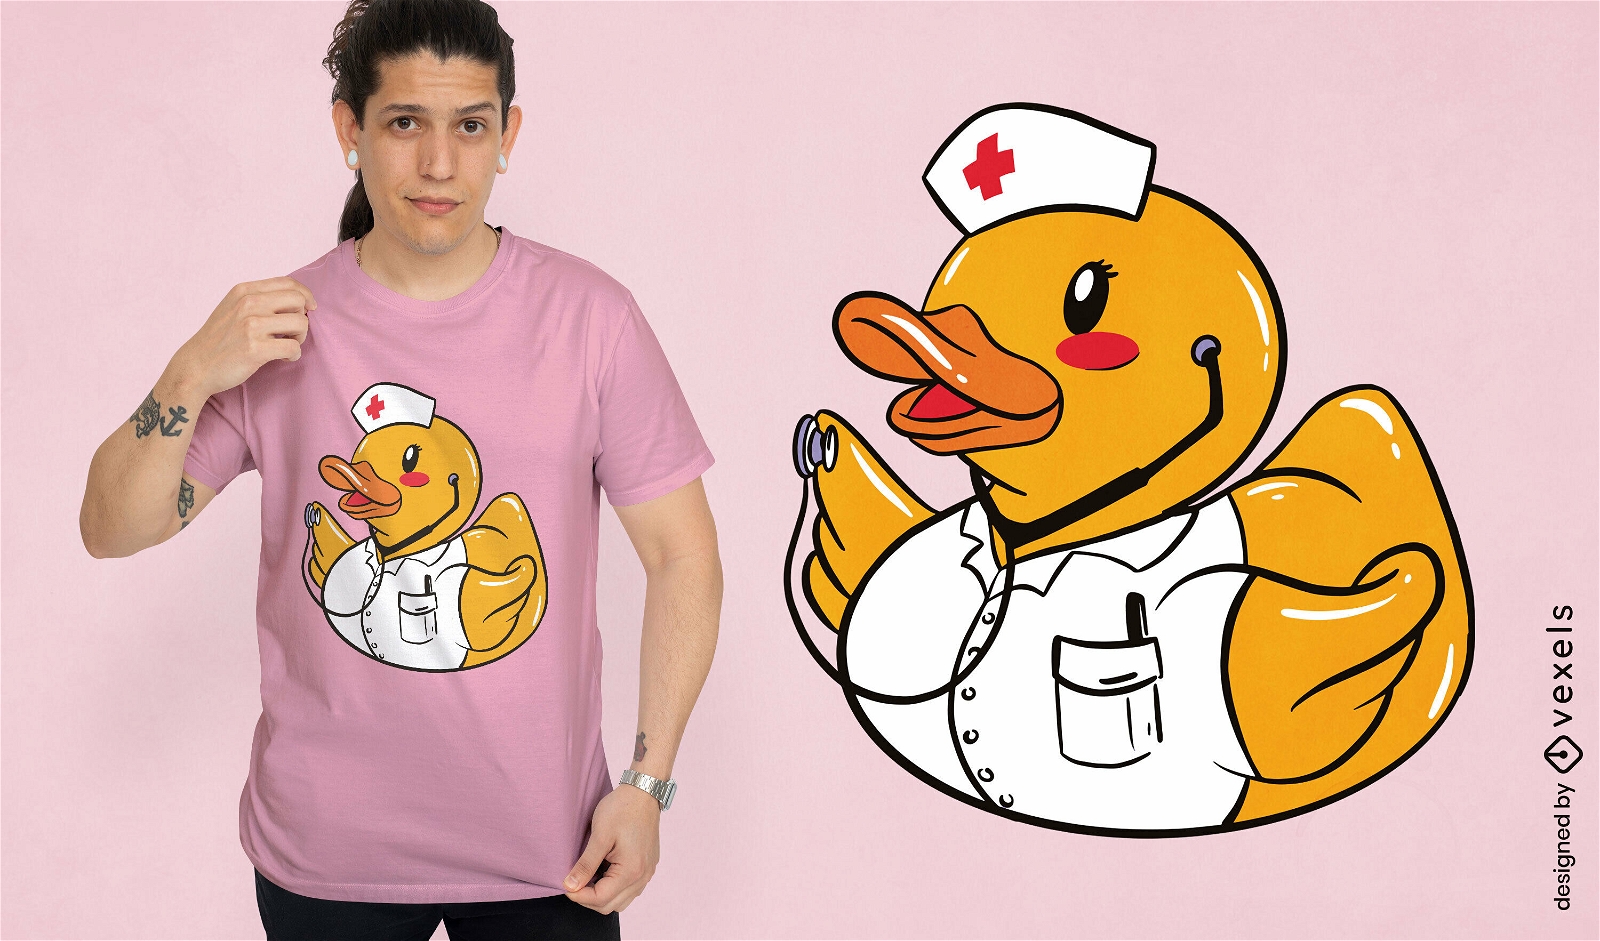 Dise?o de camiseta de enfermera animal de juguete de pato.